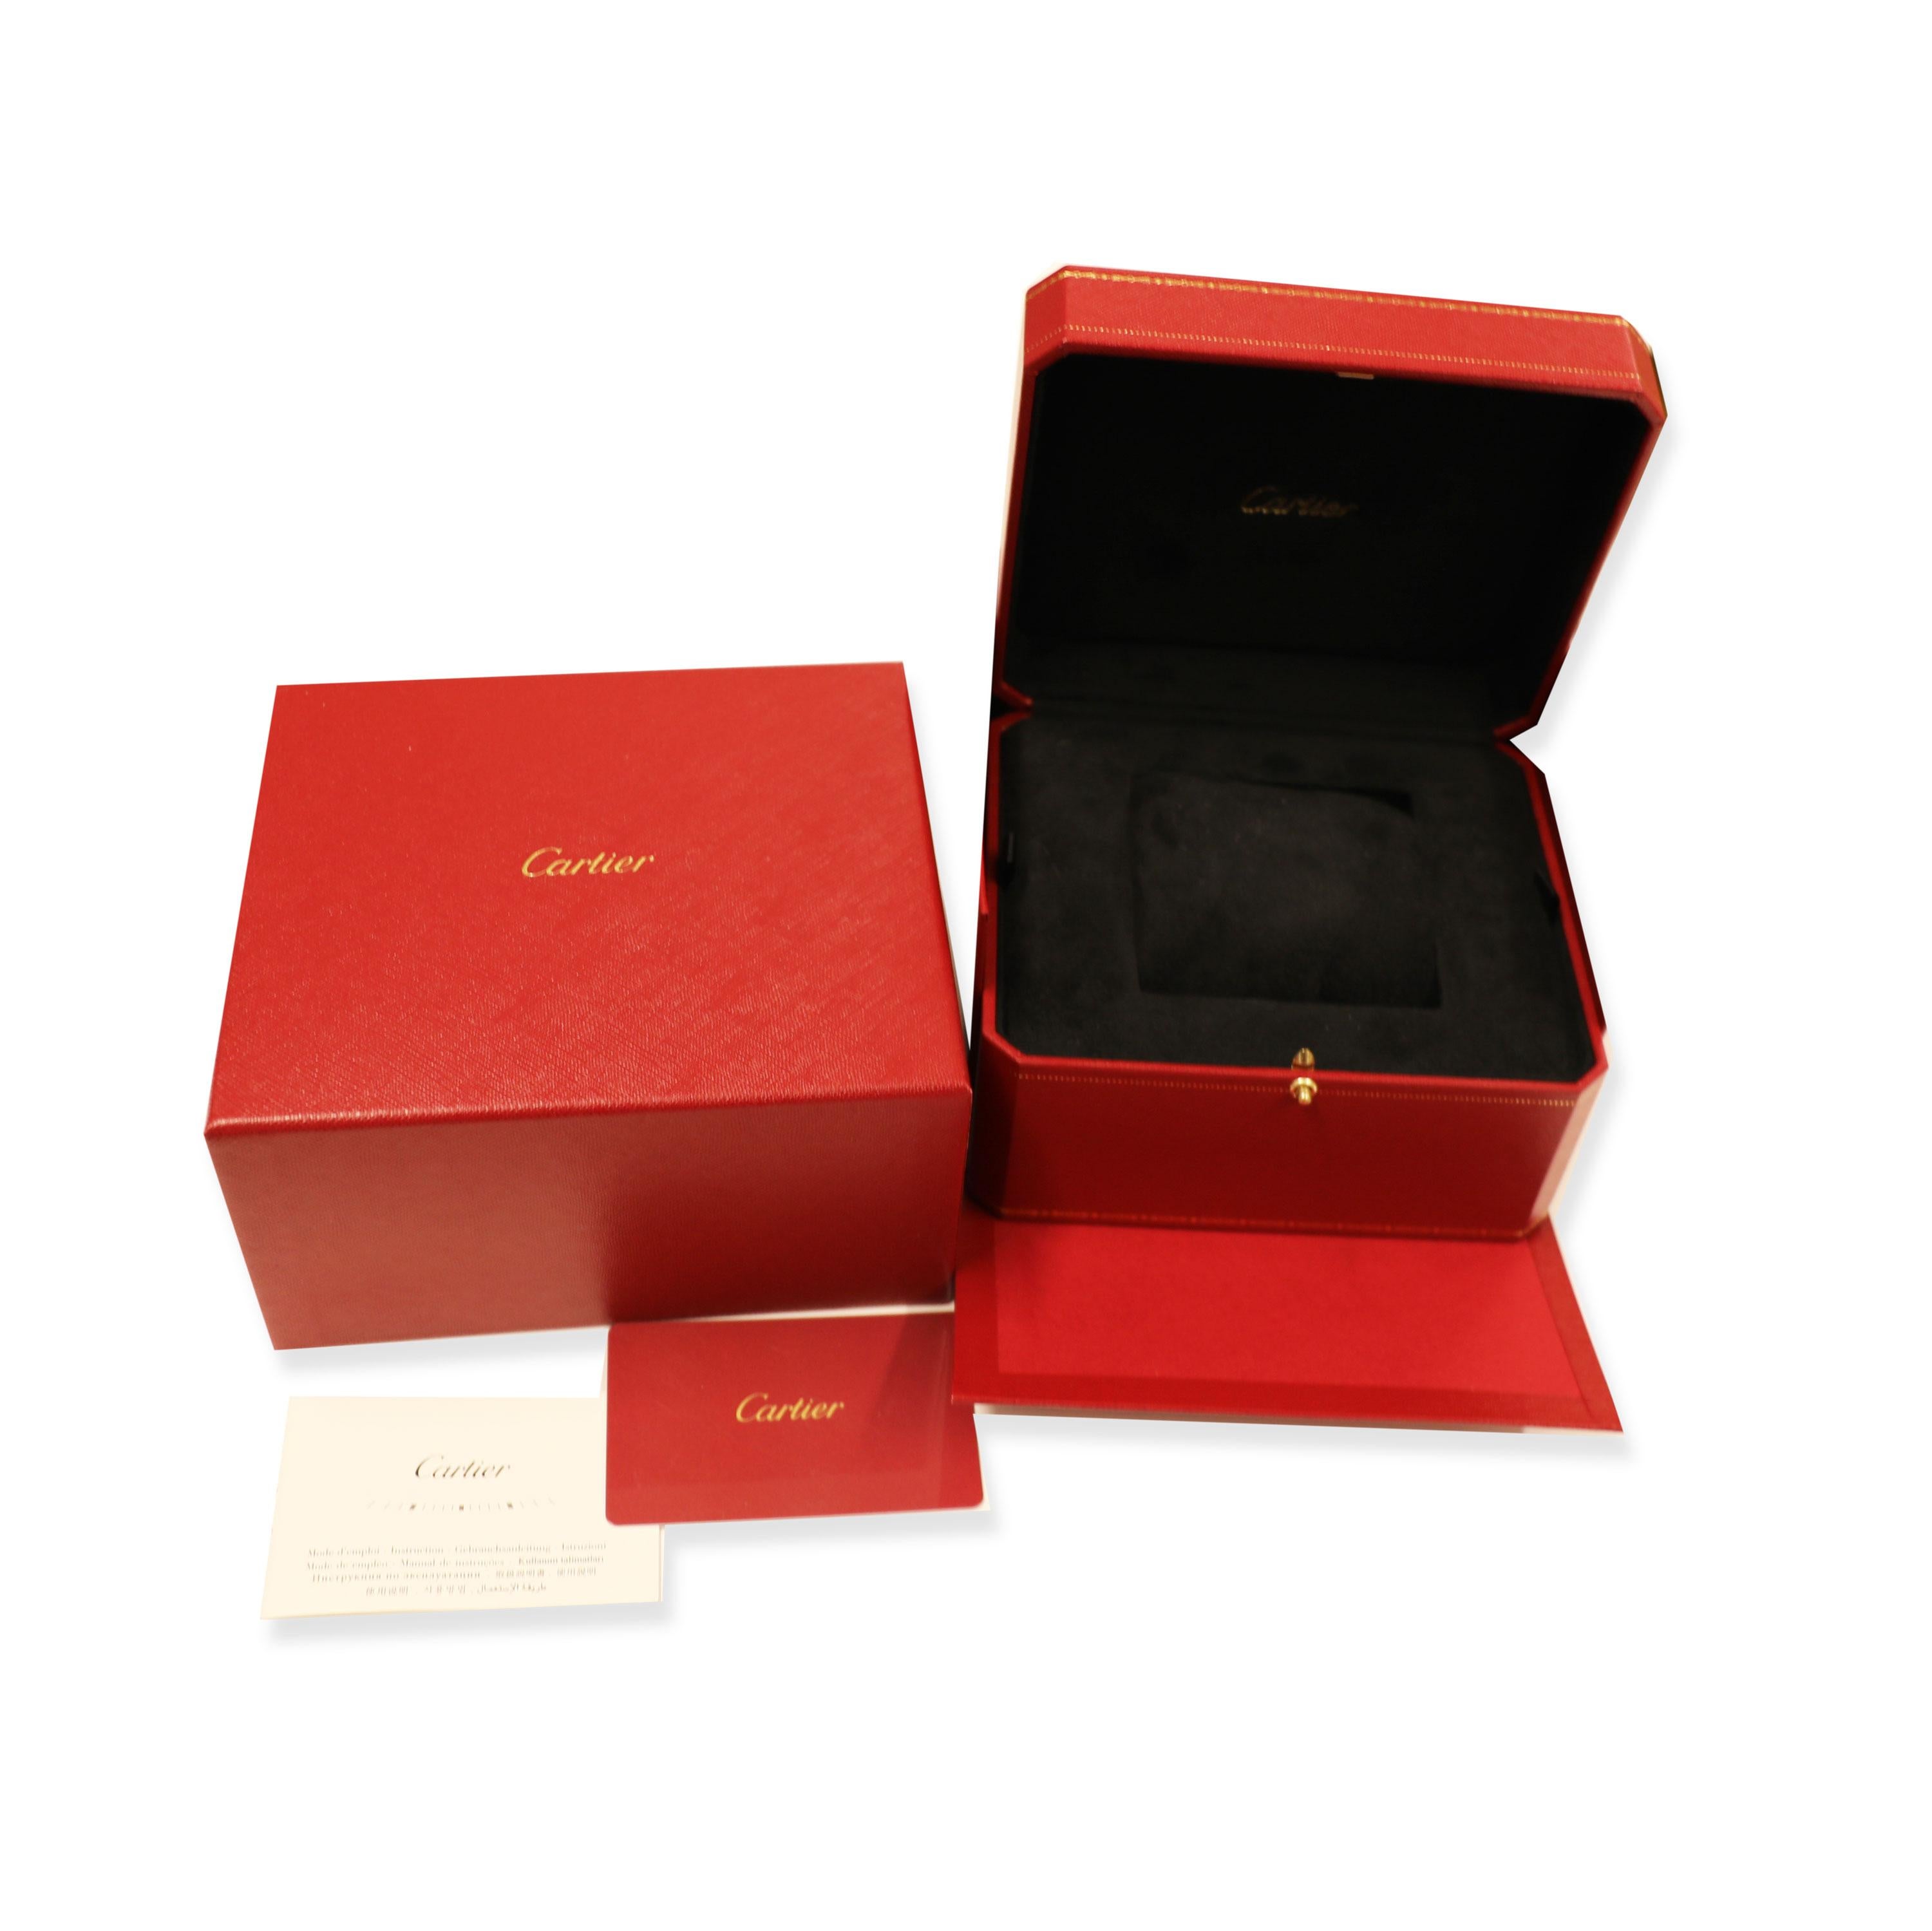 Cartier Cle de Cartier W2CL0002 Men's Watch in 18kt Stainless Steel/Rose Gold 1